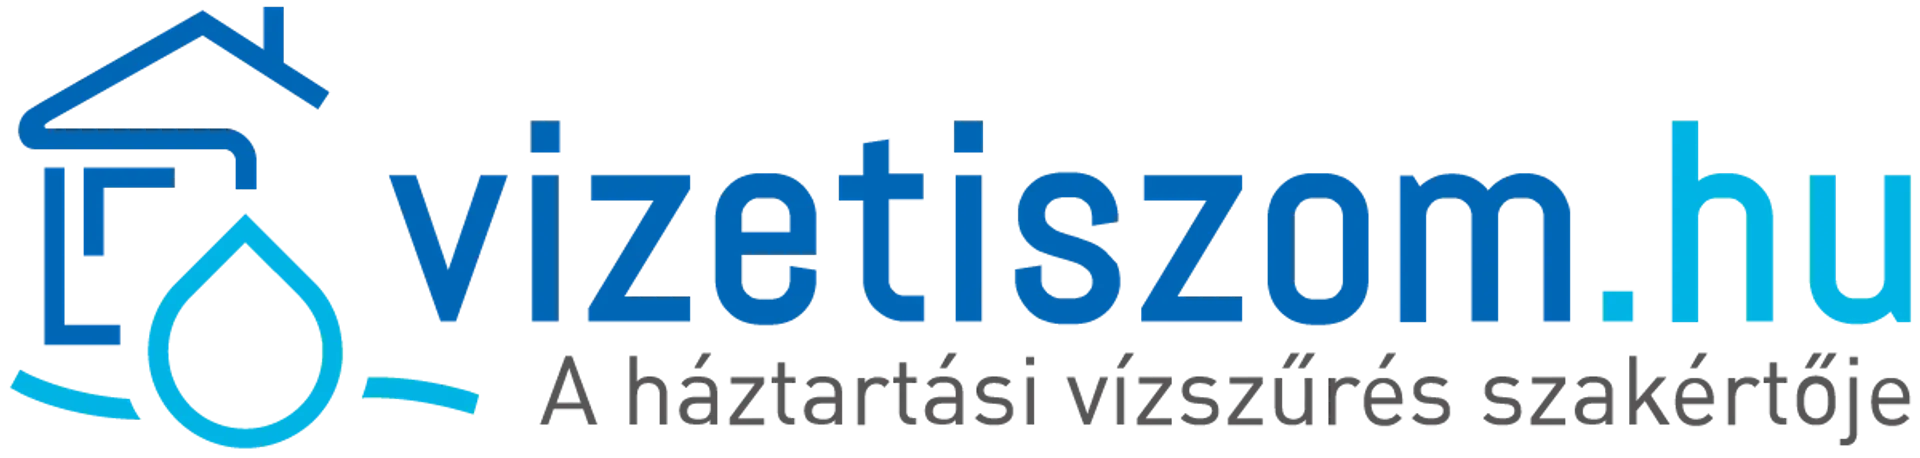 VIZETISZOM logo